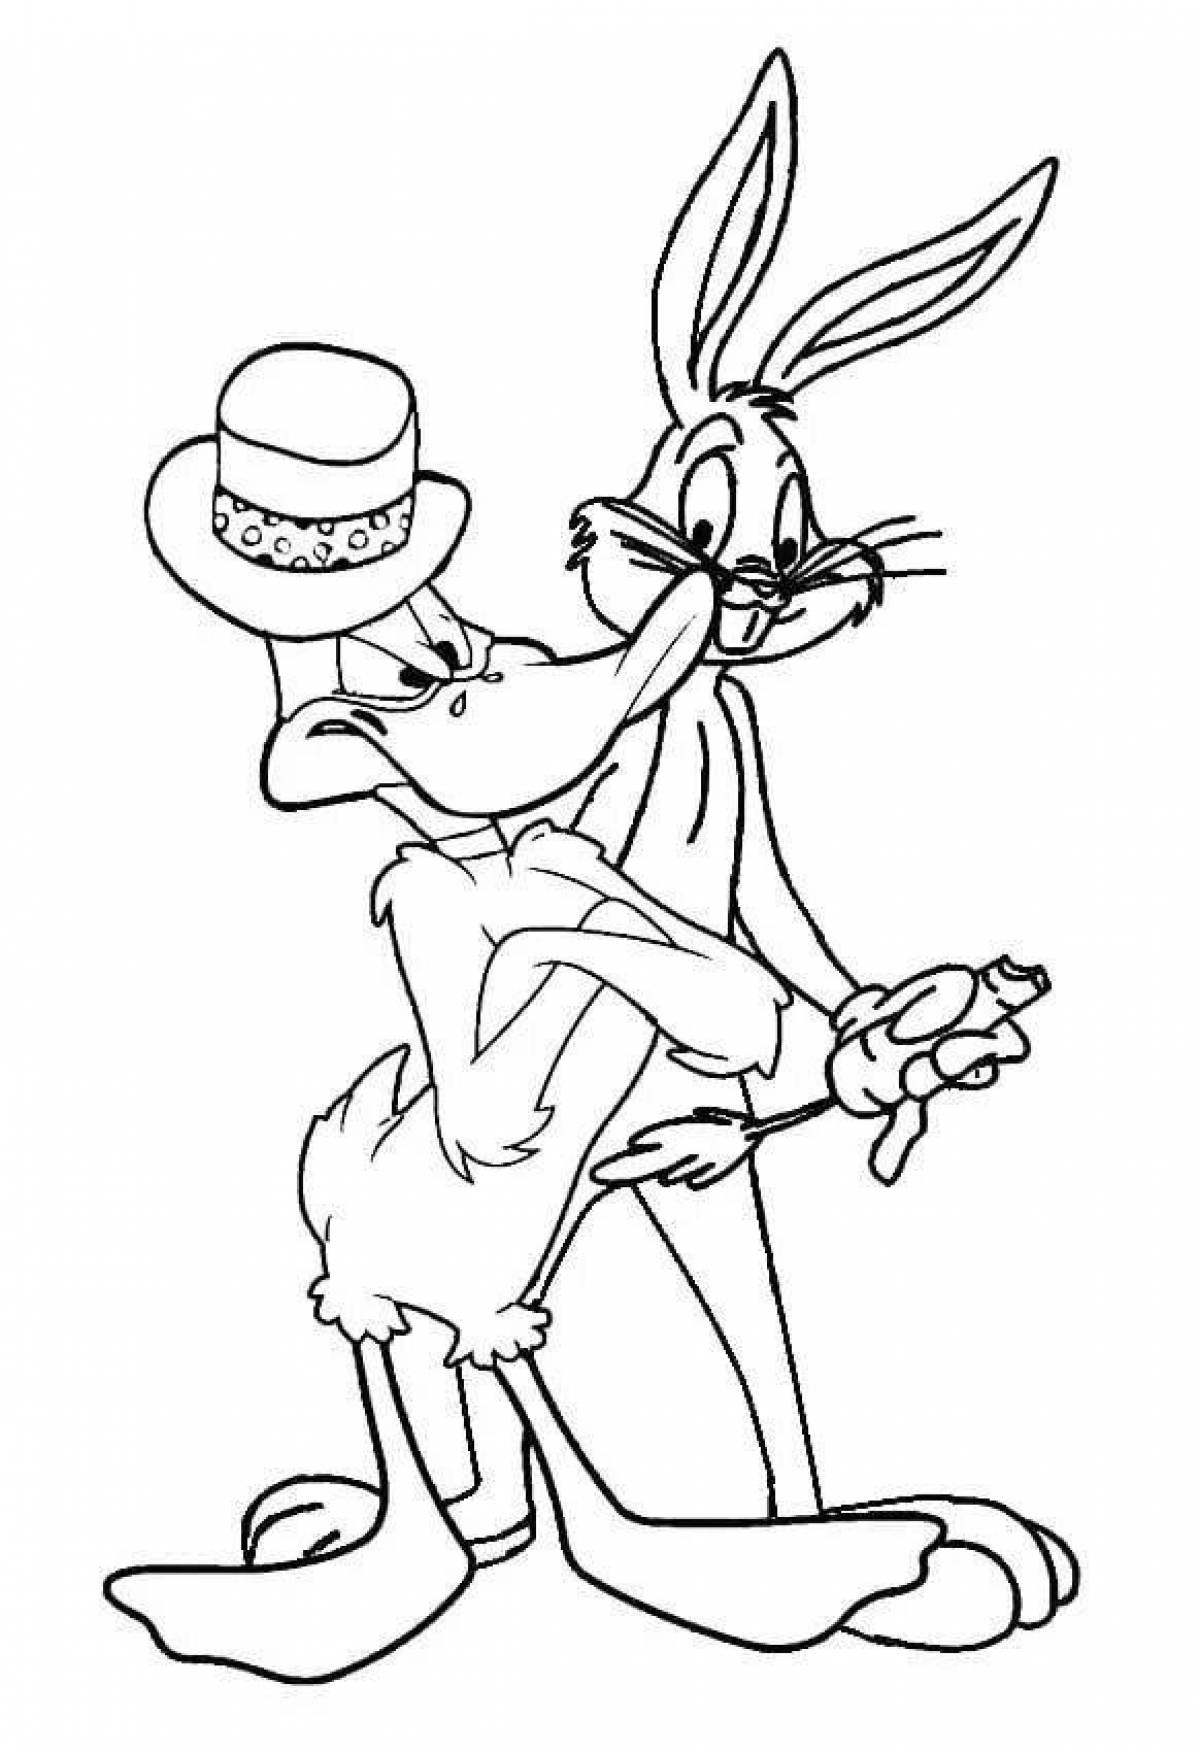 Bugs Bunny humorous coloring book